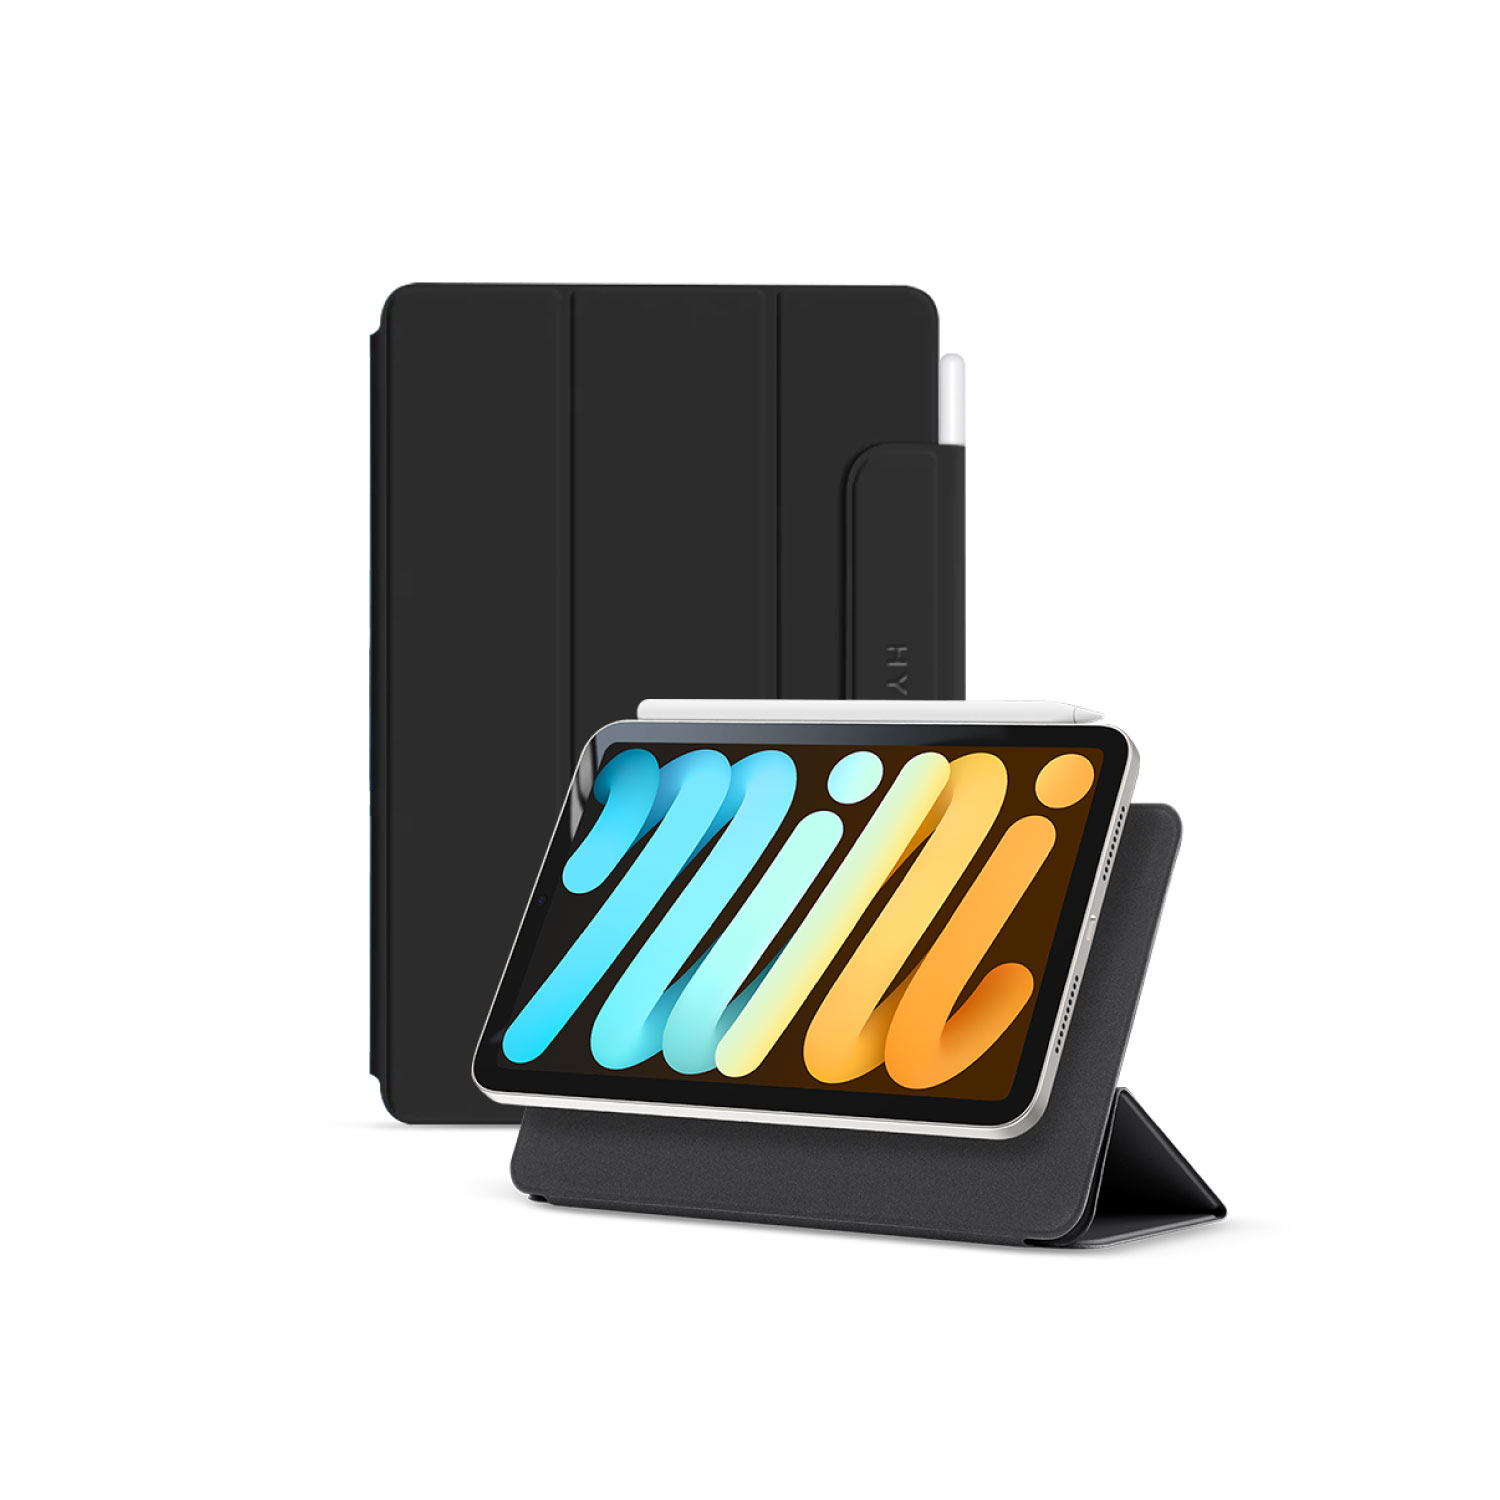 حافظة Hyphen Smart Folio لجهاز Ipad Mini - أسود 8.3 بوصة